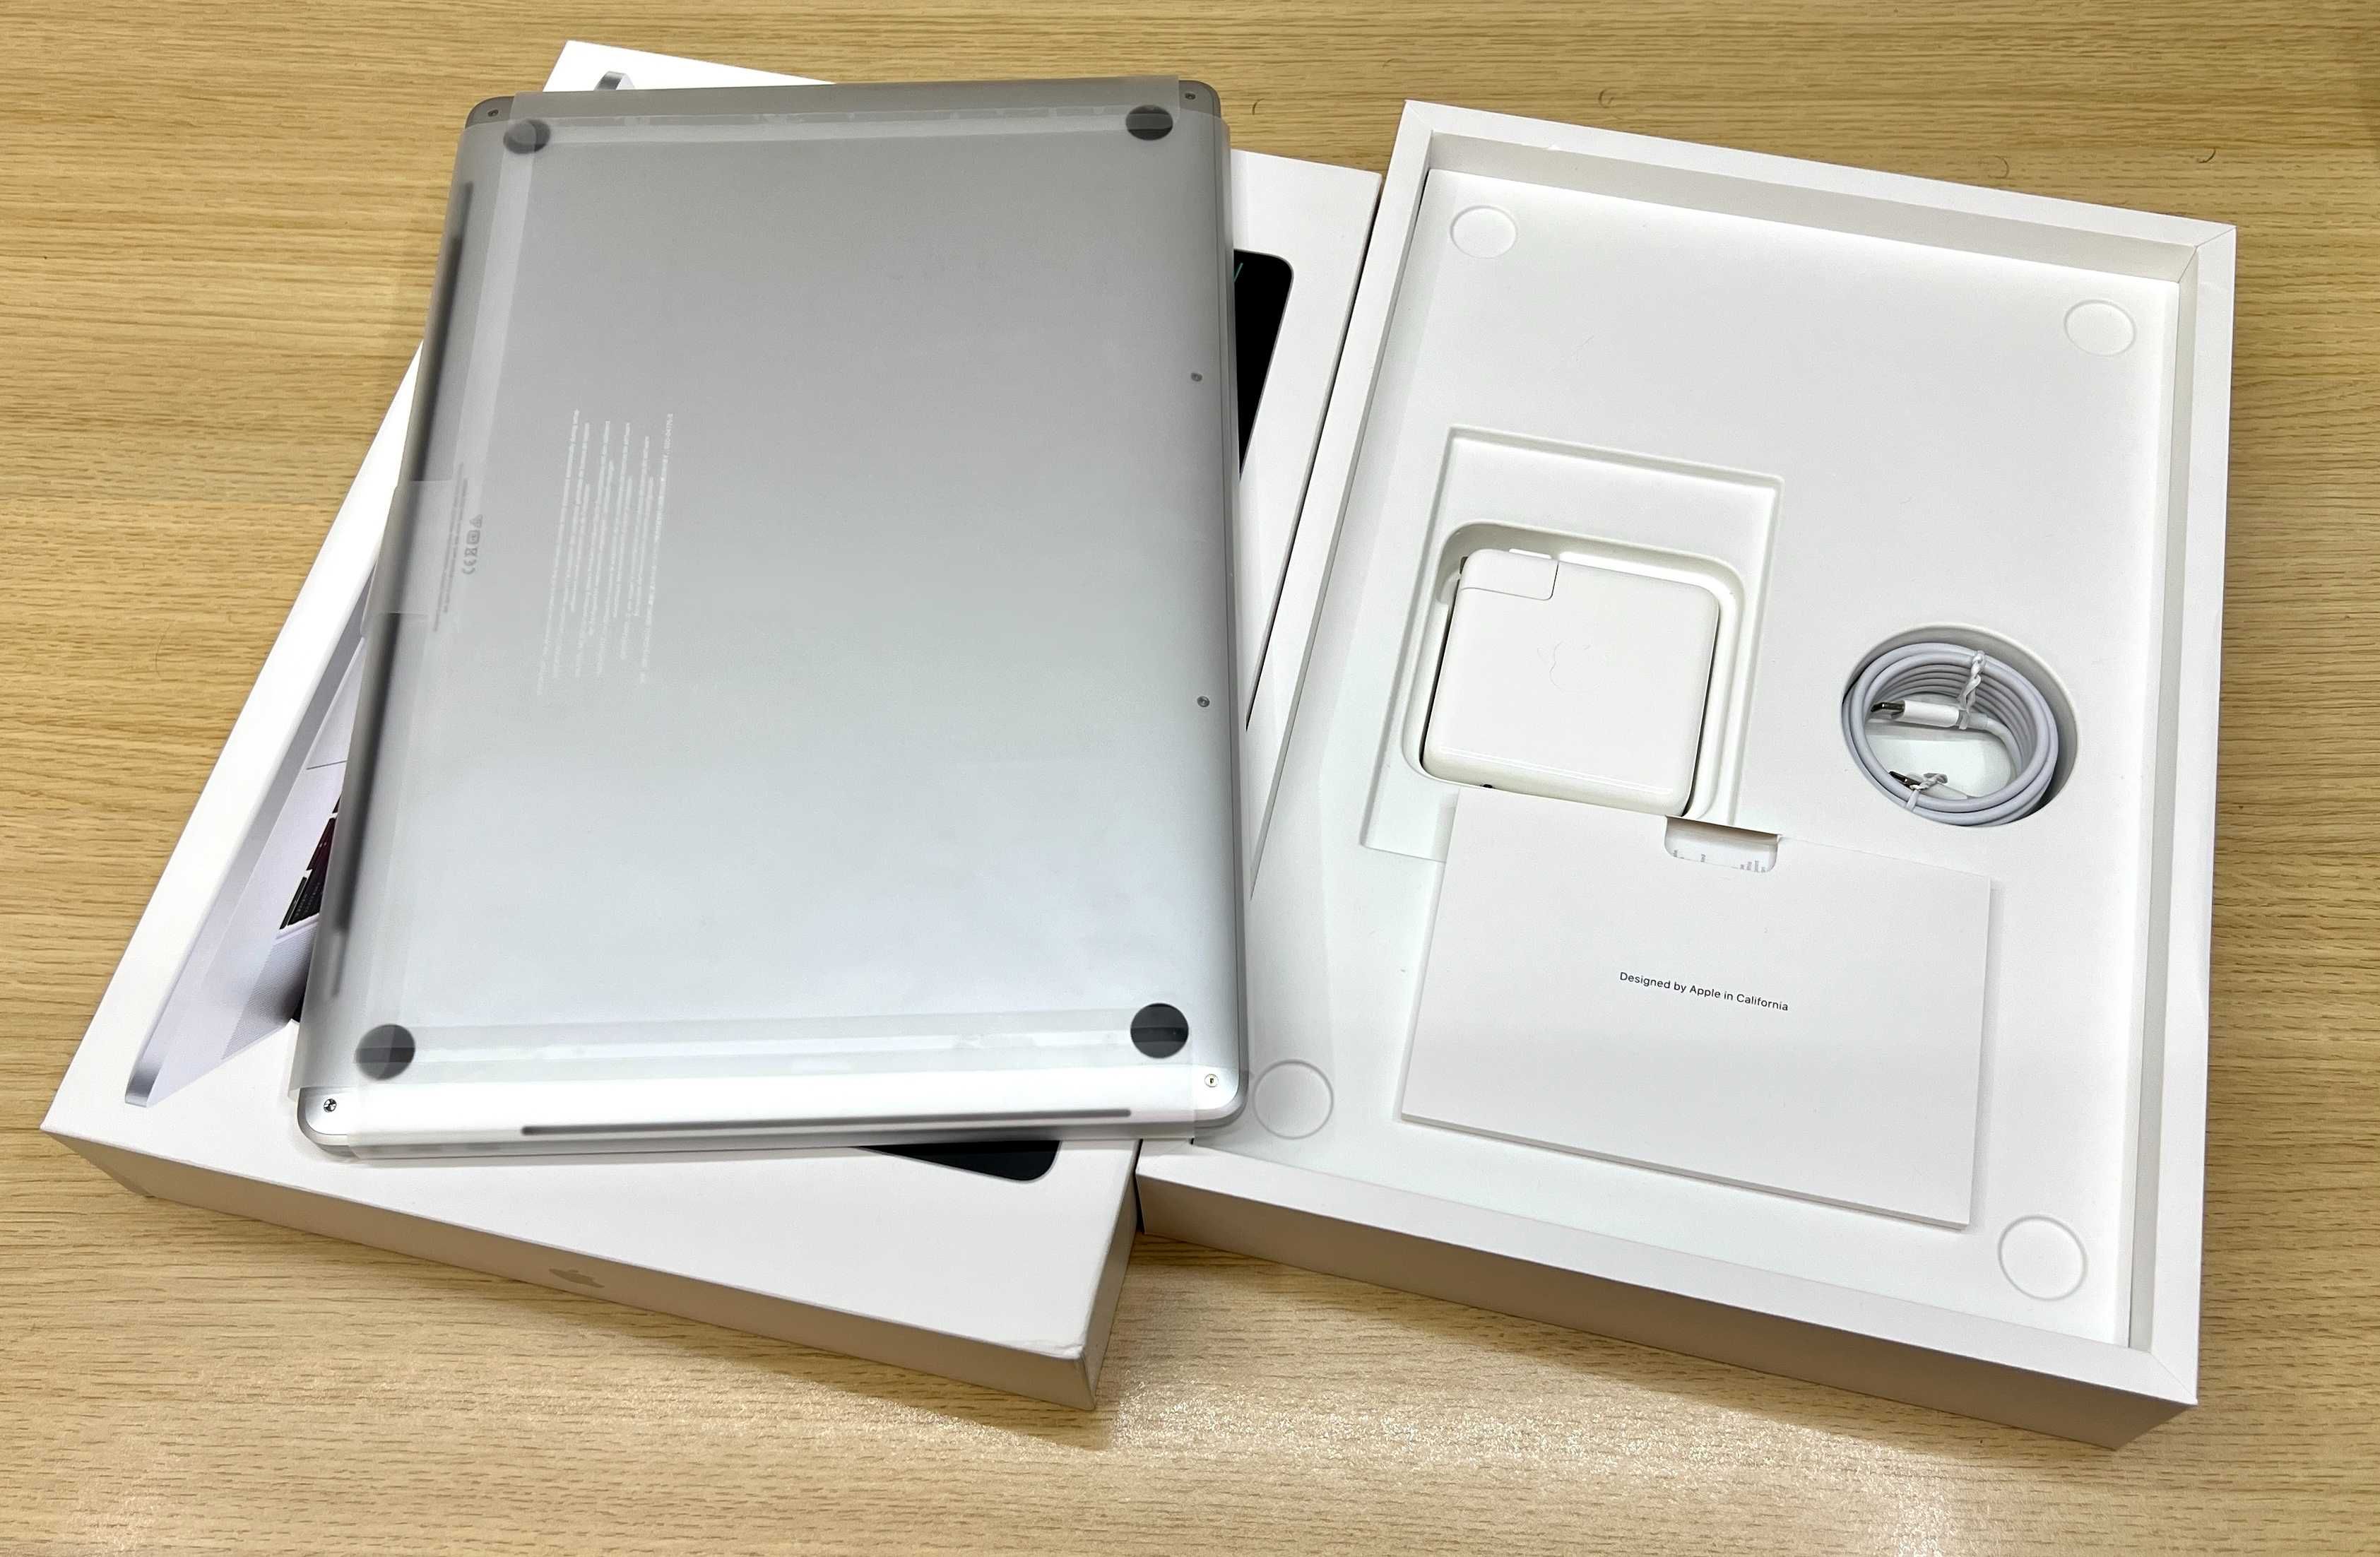 MacBook Pro 16 MVVM2 Silver 2019 i9/16GB/1TB/RP5500 - РОЗСТРОЧКА